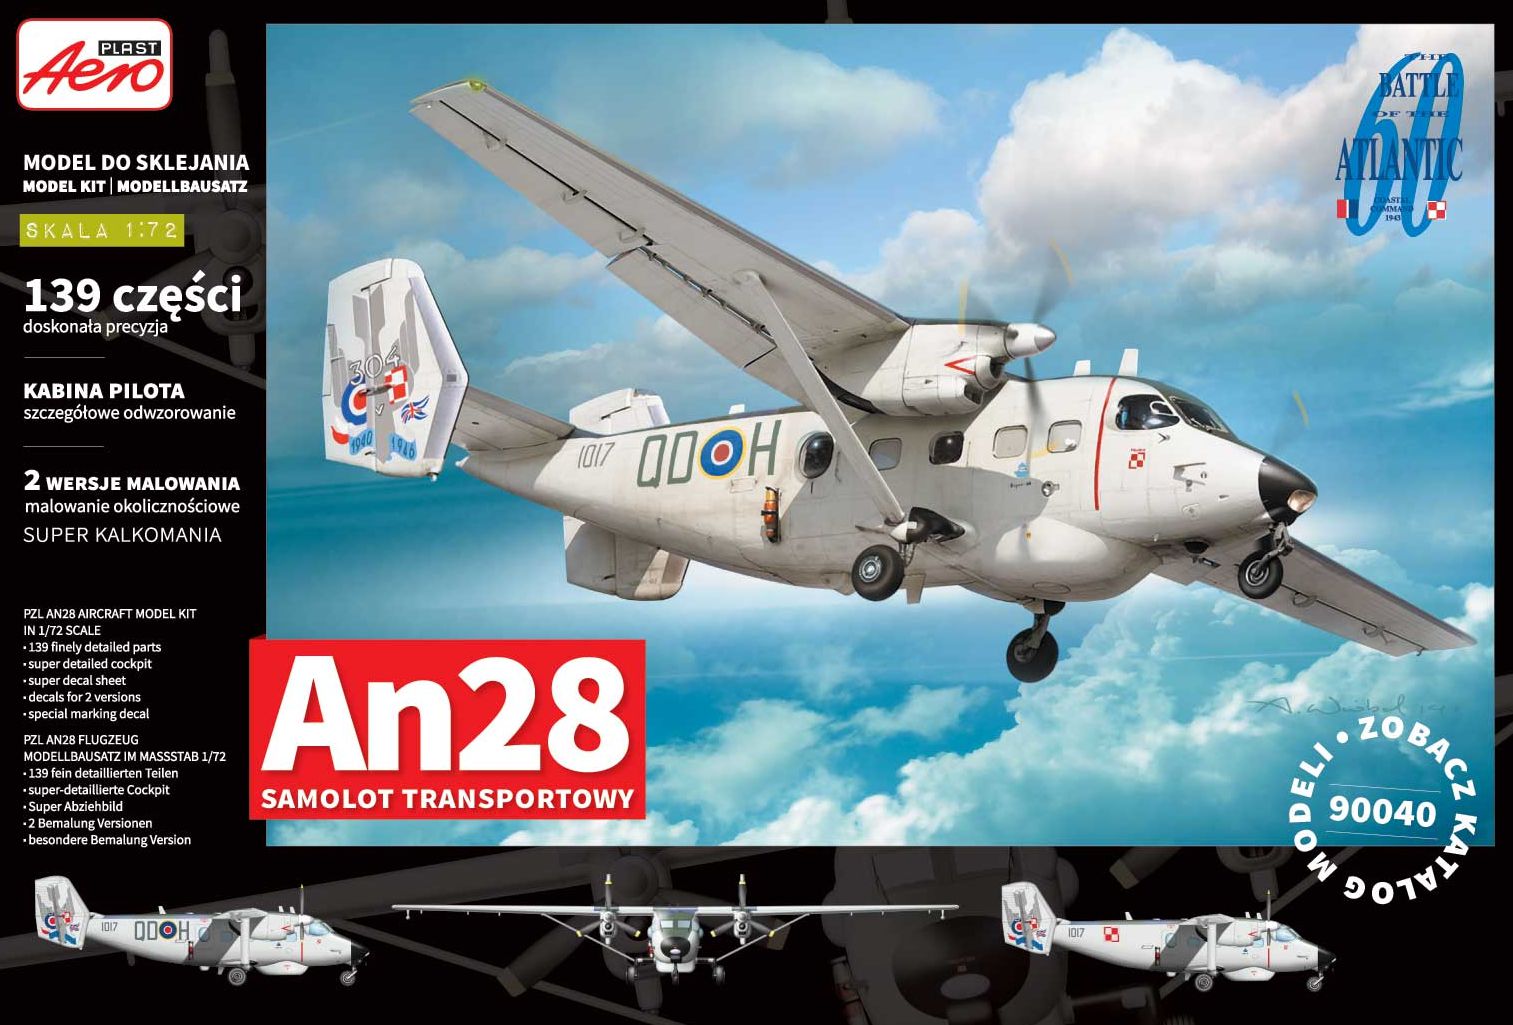 An-28 Samolot transportowy (Transport plane) 